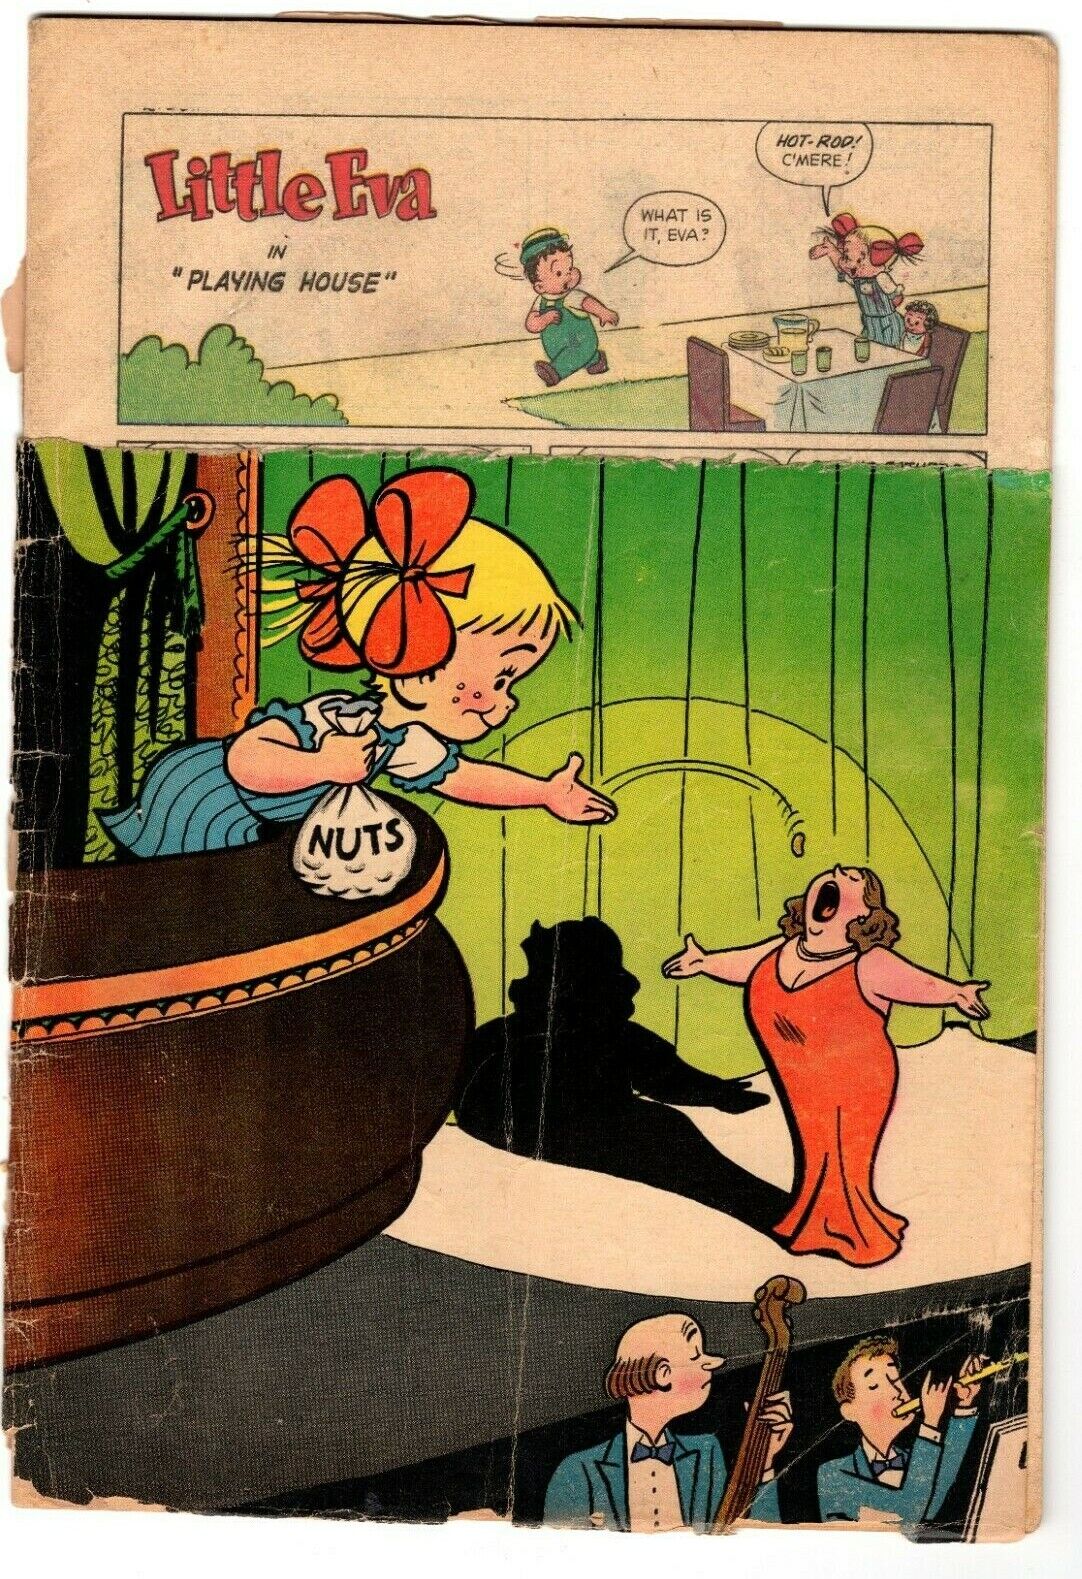 Little Eva #38 Aug 1956 Silver Age Comic Remainder Copy A12G1251 | eBay